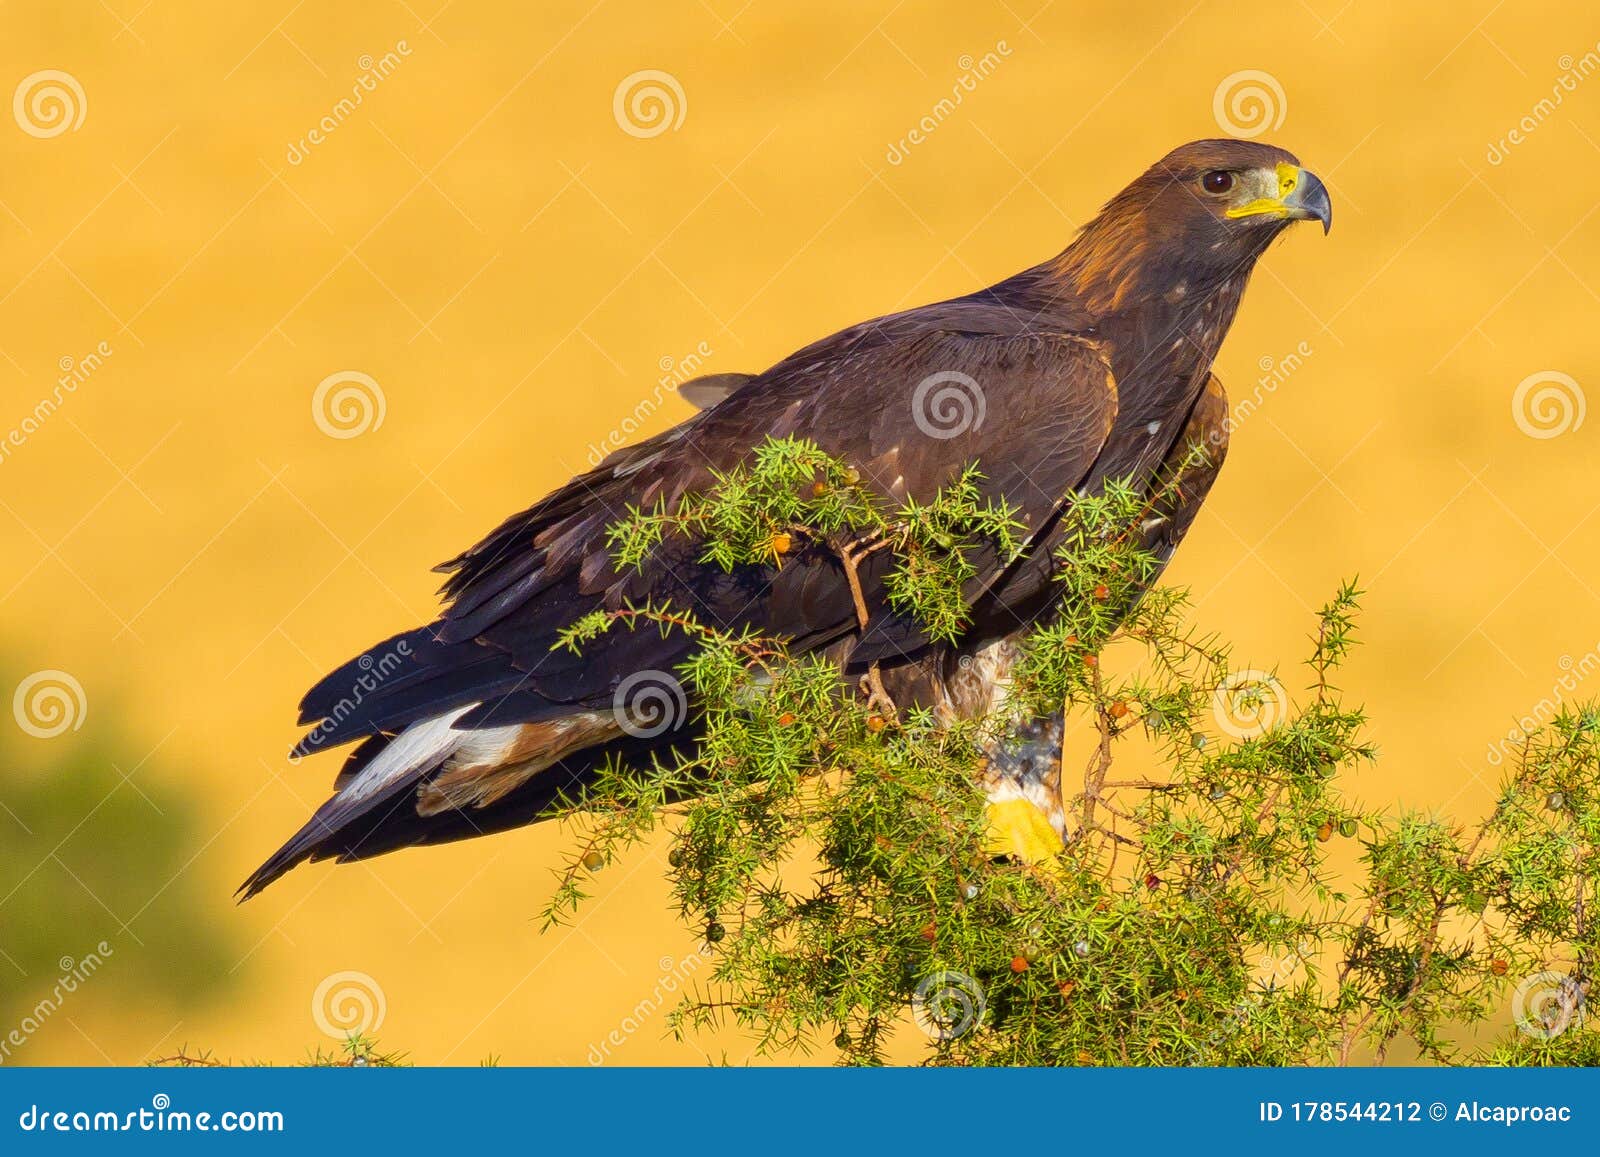 golden eagle, aquila chrysaetos